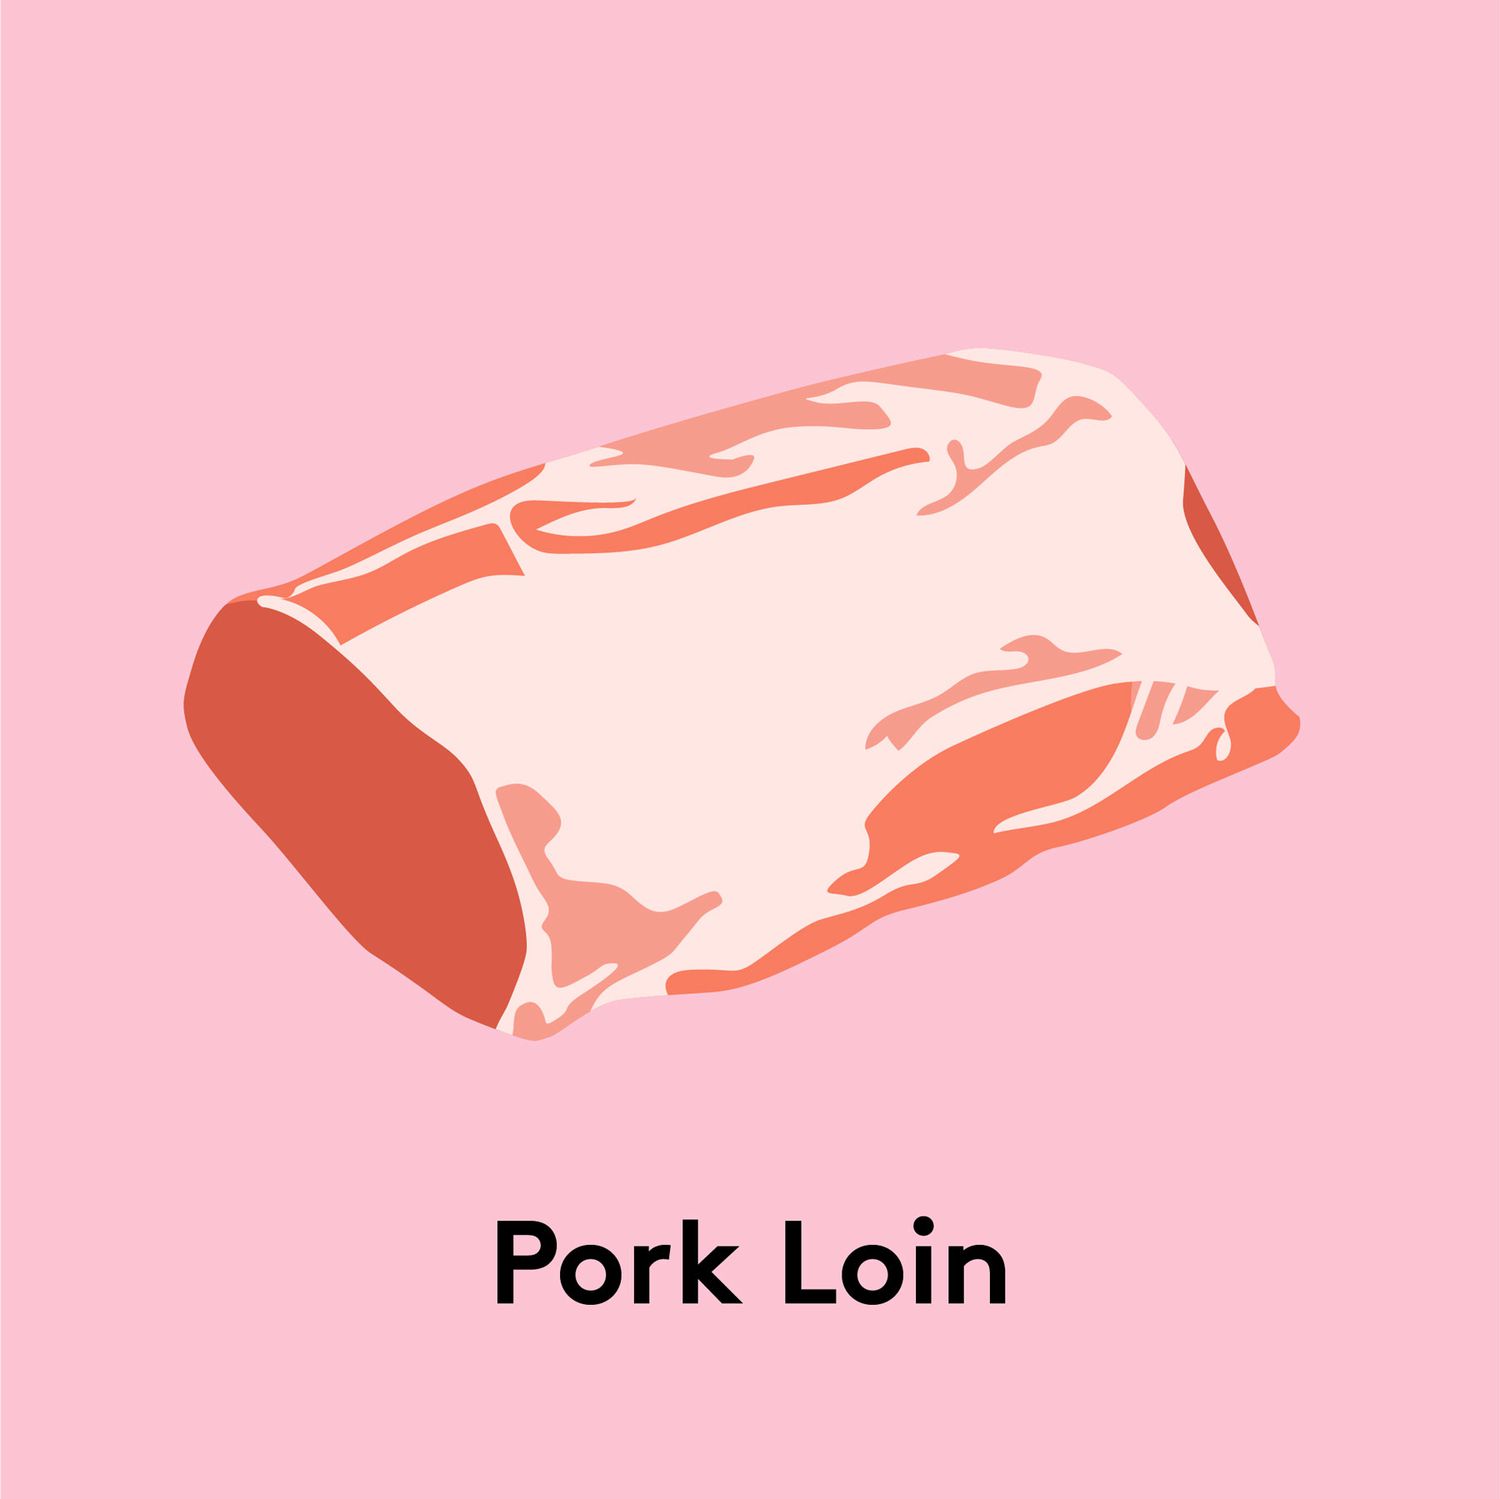 Types of pork cuts - Pork Loin